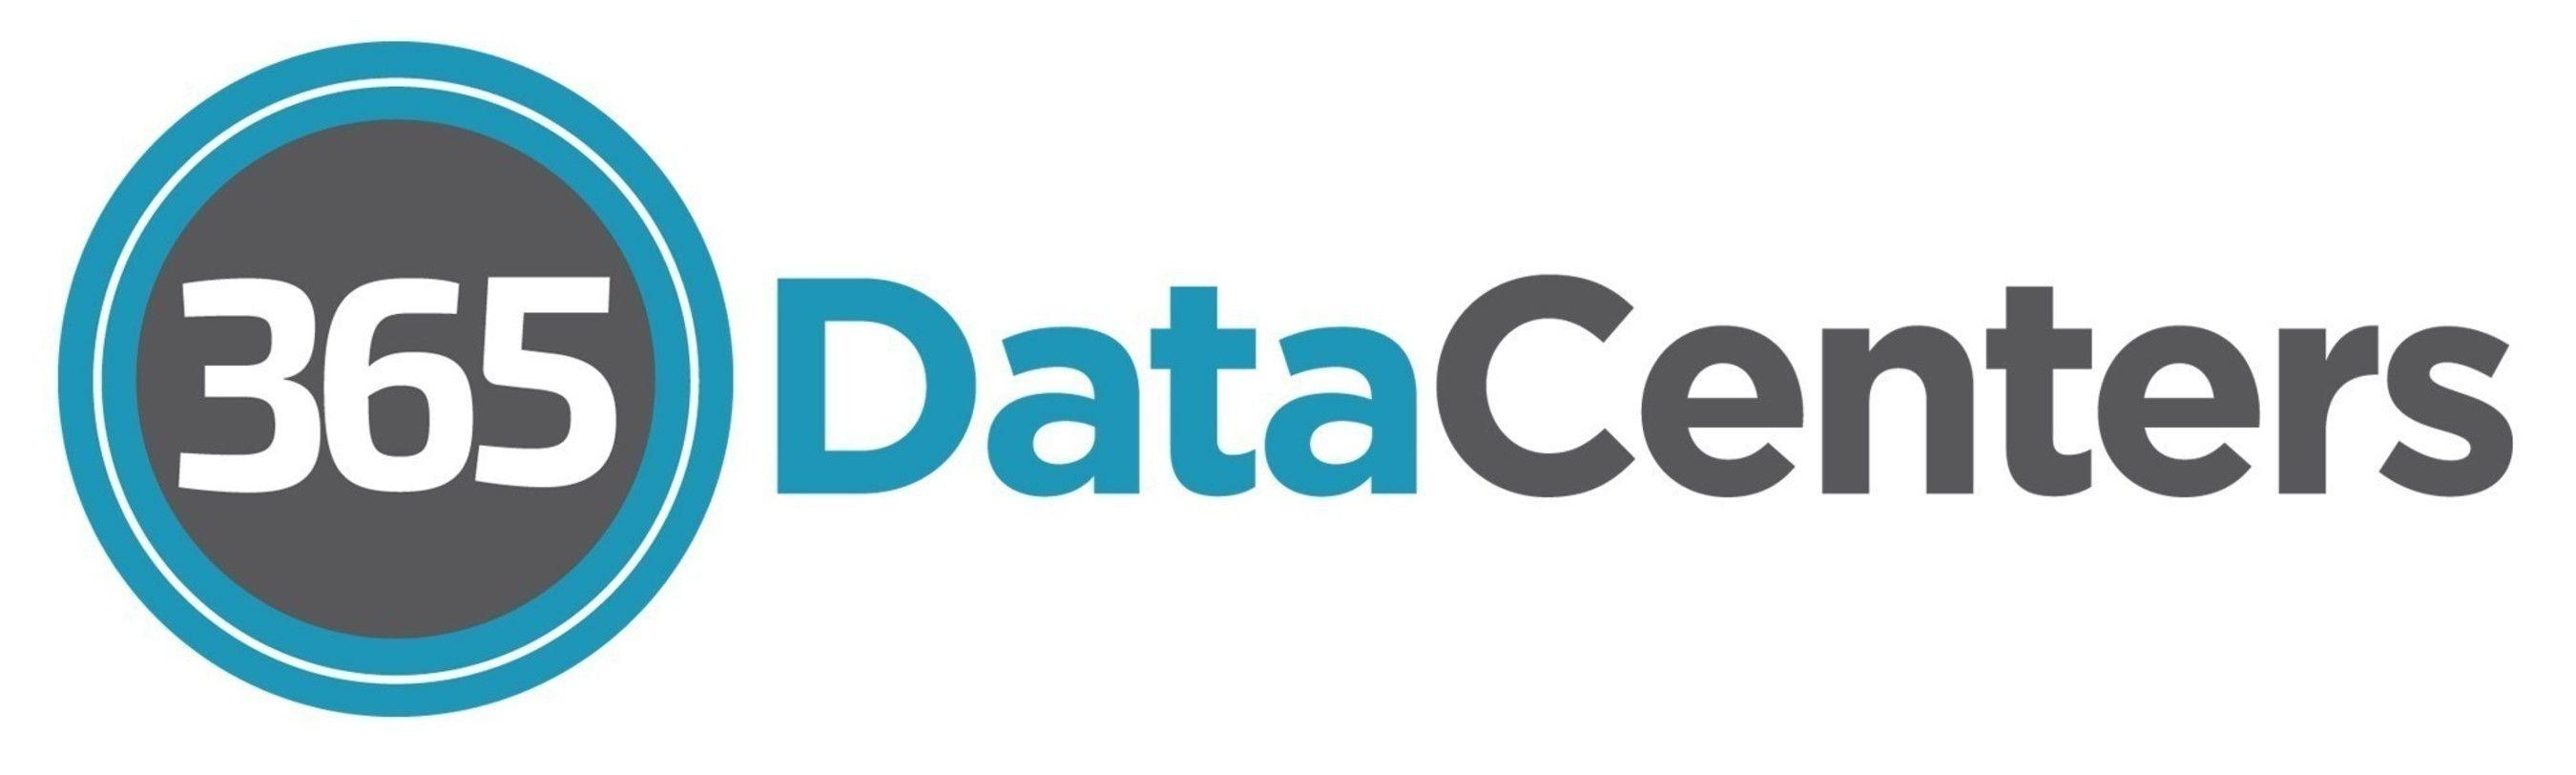 Zayo Logo - 365 Data Centers Partners with Zayo to Expand Connectivity to the ...